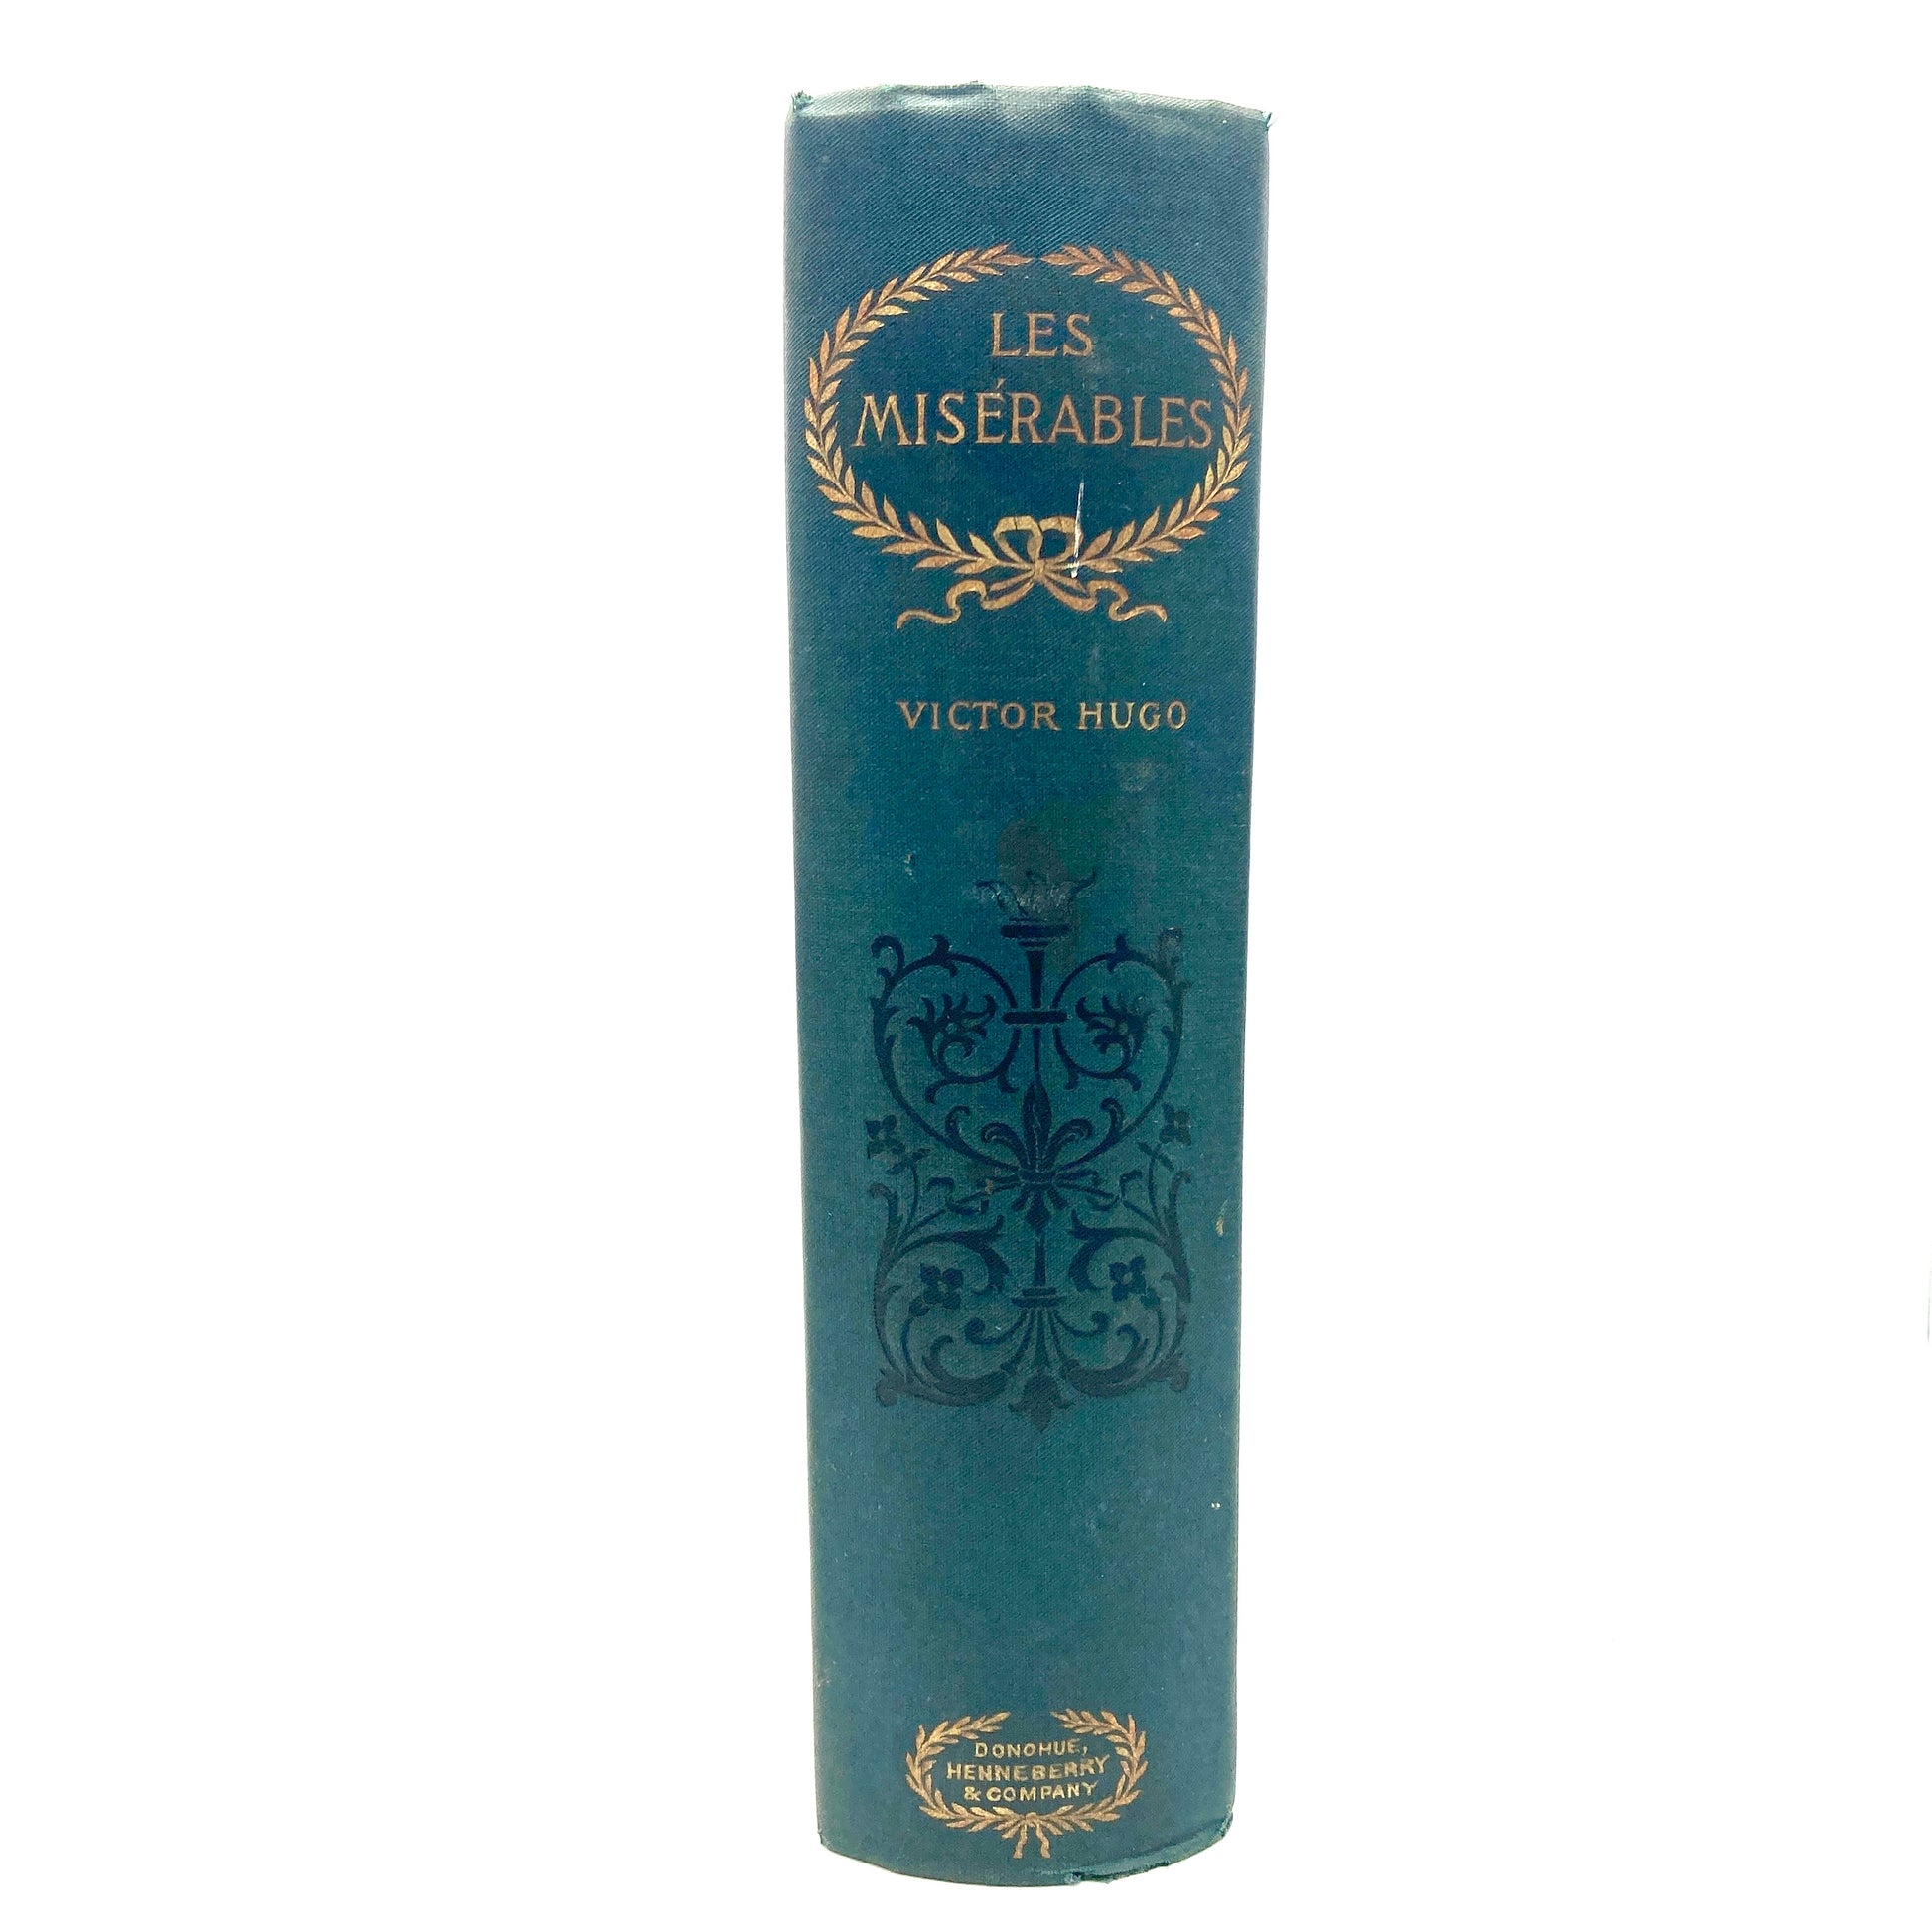 HUGO, Victor "Les Miserables" [Donohue, Henneberry & Co, c1896] - Buzz Bookstore